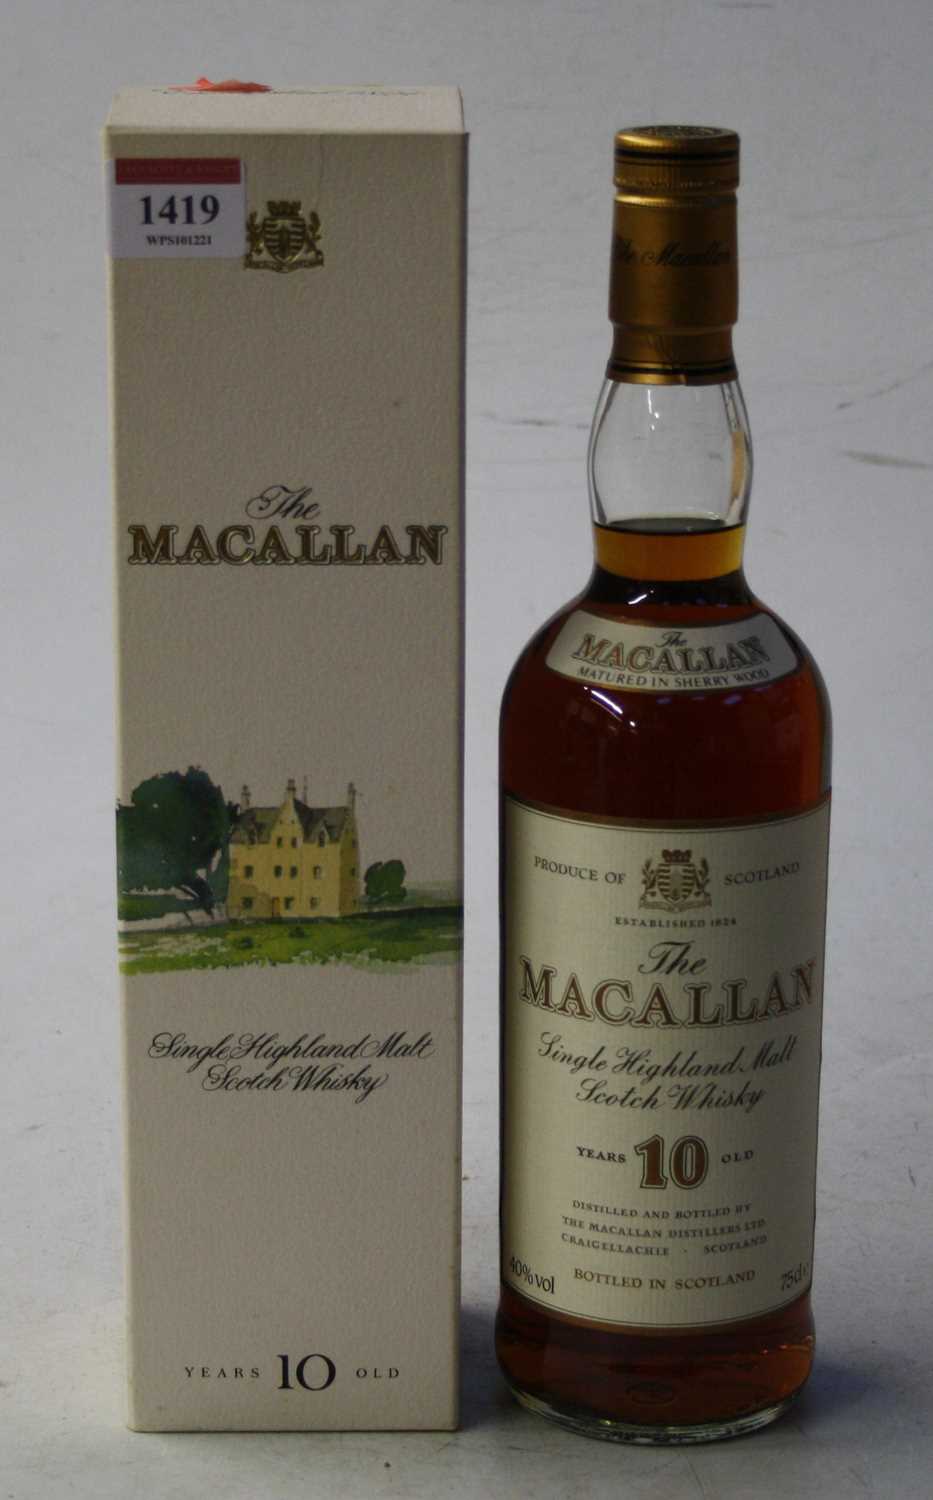 Lot 1419 - The Macallan single Highland malt Scotch...